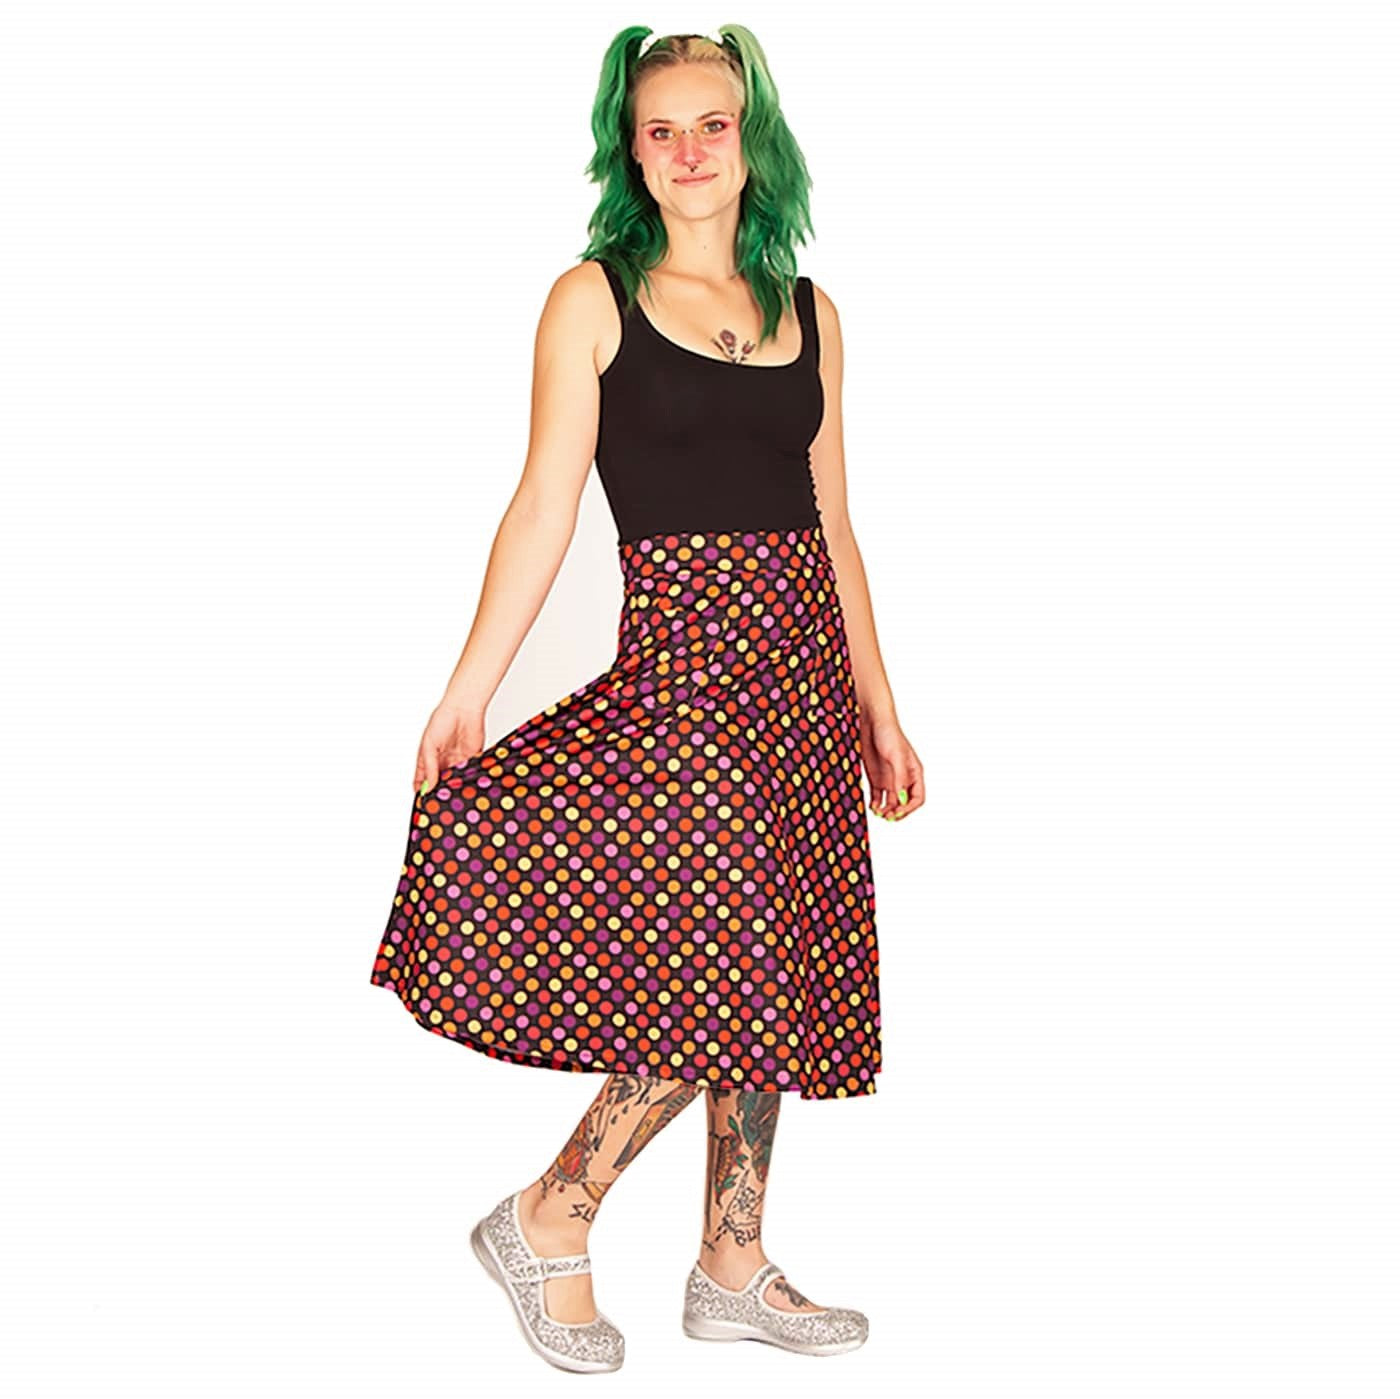 Pastel Confetti Original Skirt by RainbowsAndFairies.com (Polka Dots - Stripes - Spots - Skirt With Pockets - Aline Skirt - Vintage Inspired - Rock & Roll) - SKU: CL_OSKRT_CONFT_PAS - Pic 04